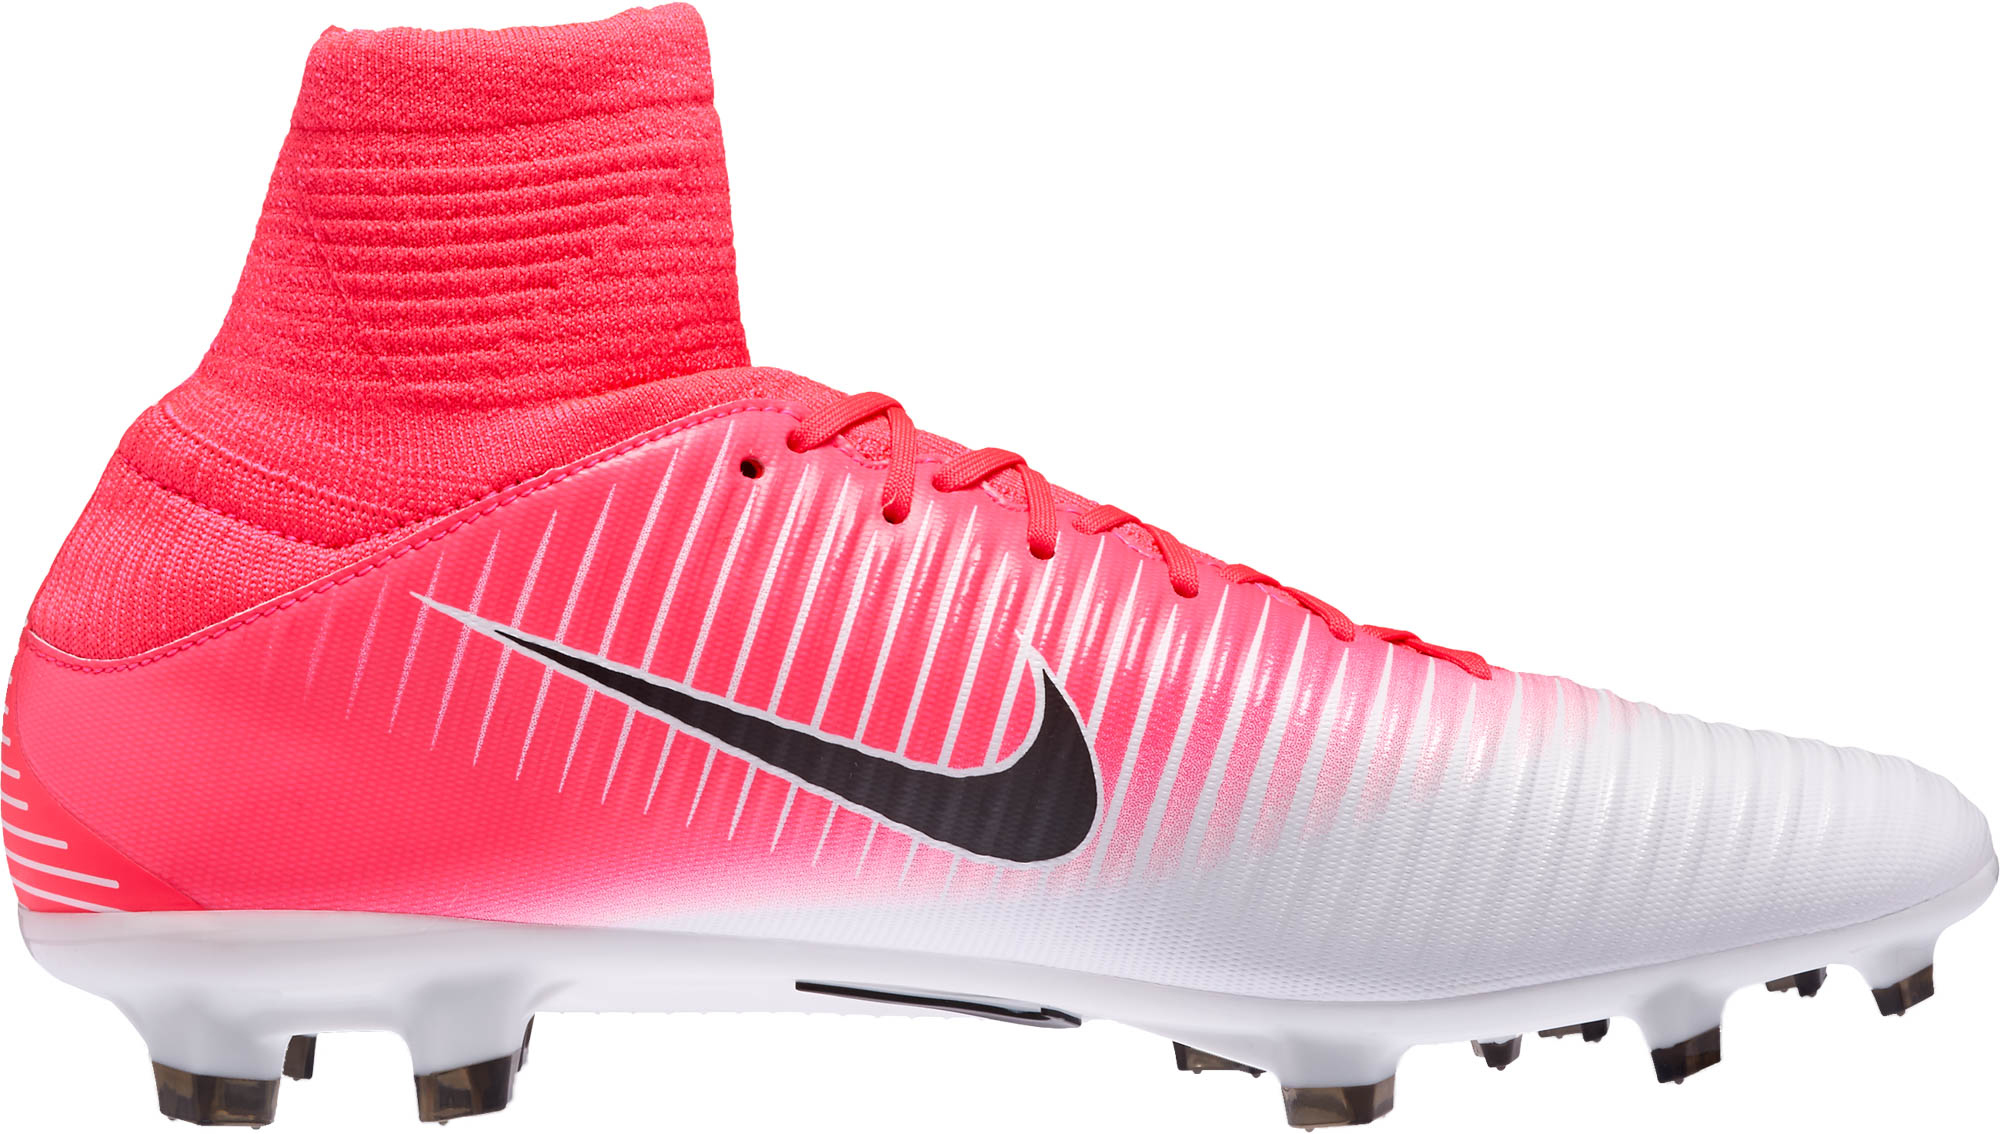 Manto trigo caravana Nike Mercurial Veloce lll FG - Pink Soccer Cleats